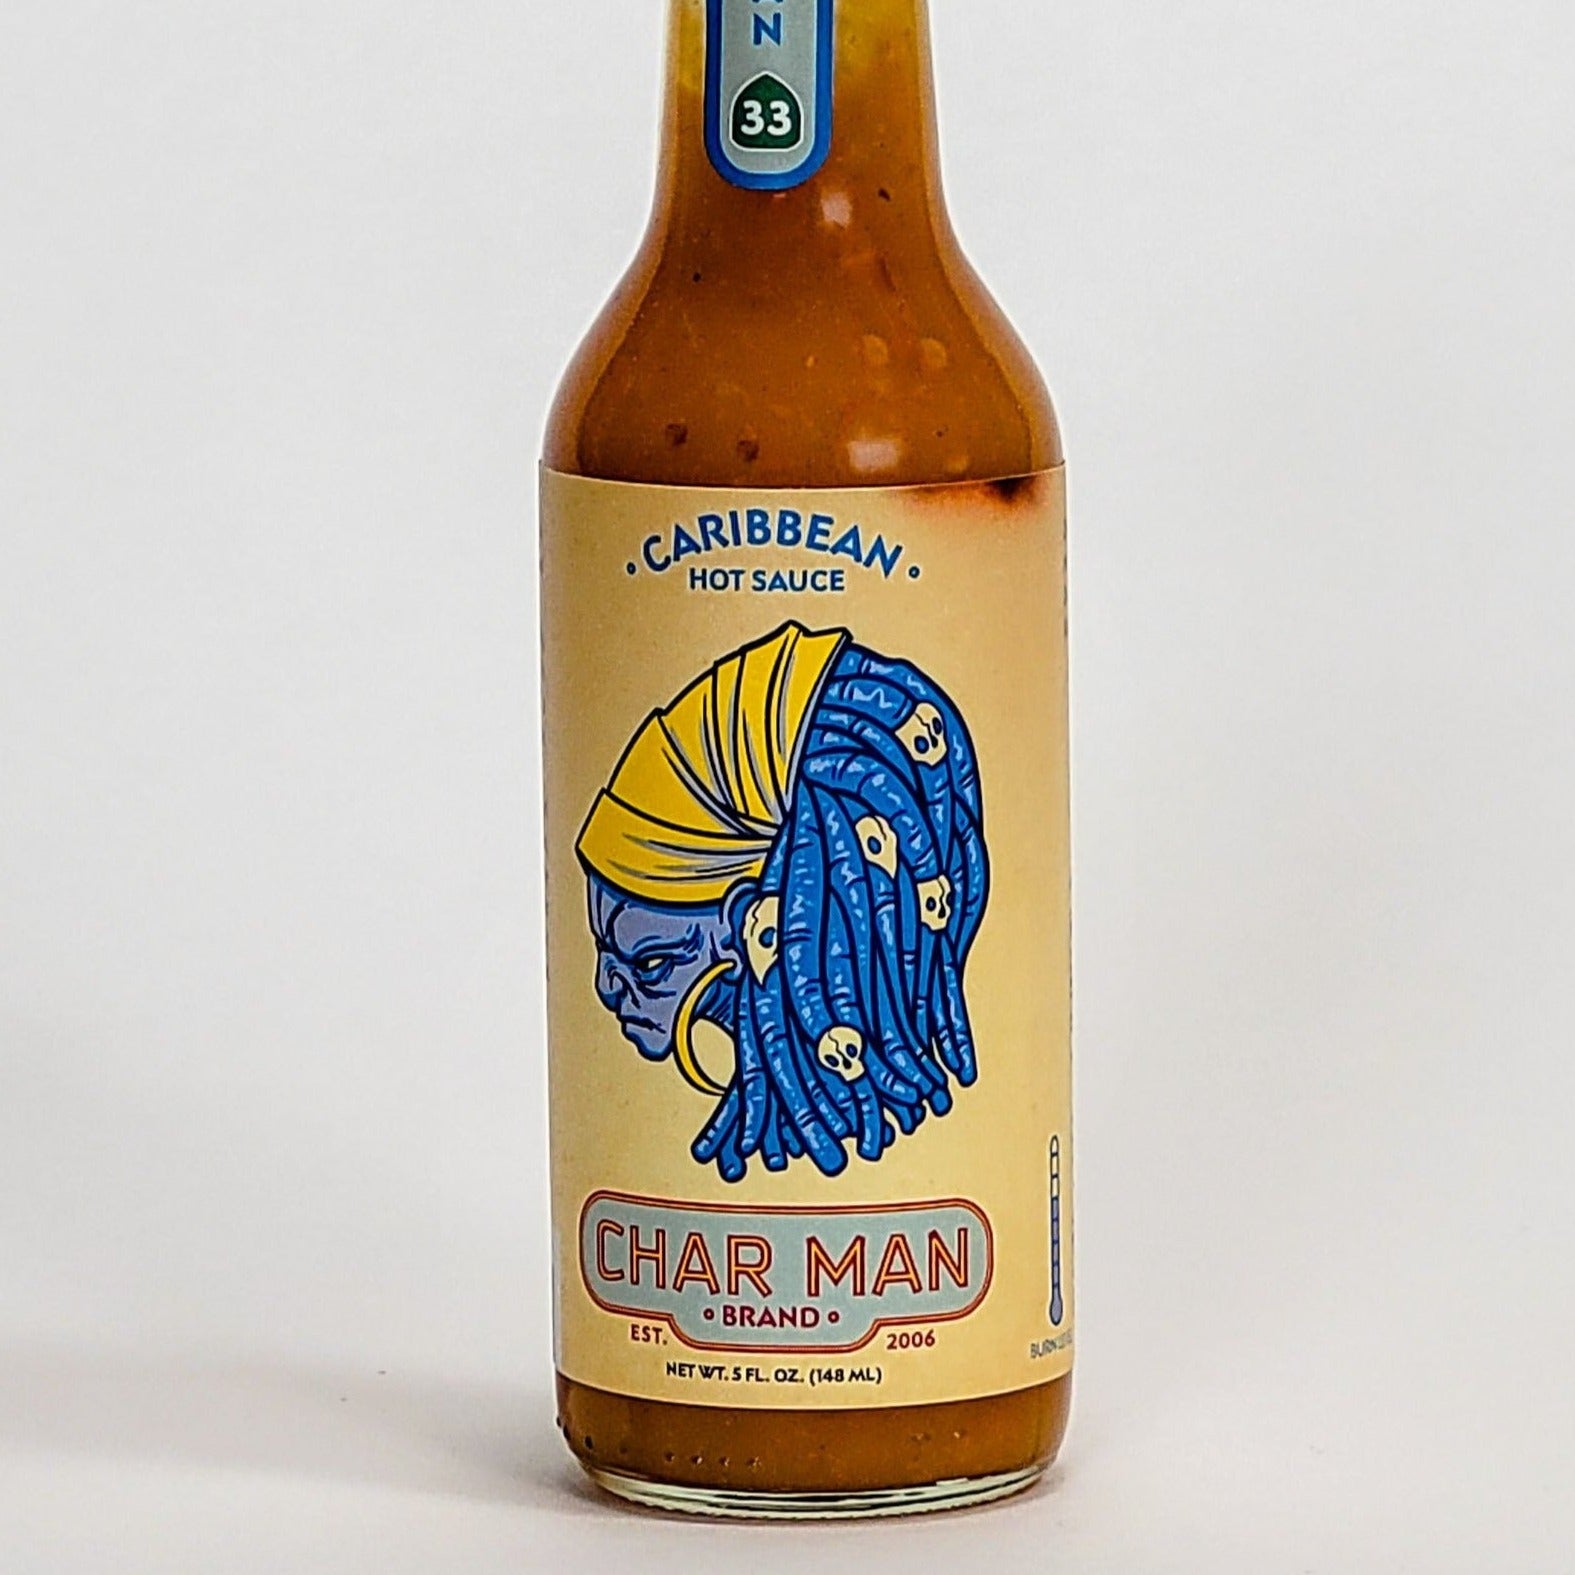 char man brand caribbean hot sauce label